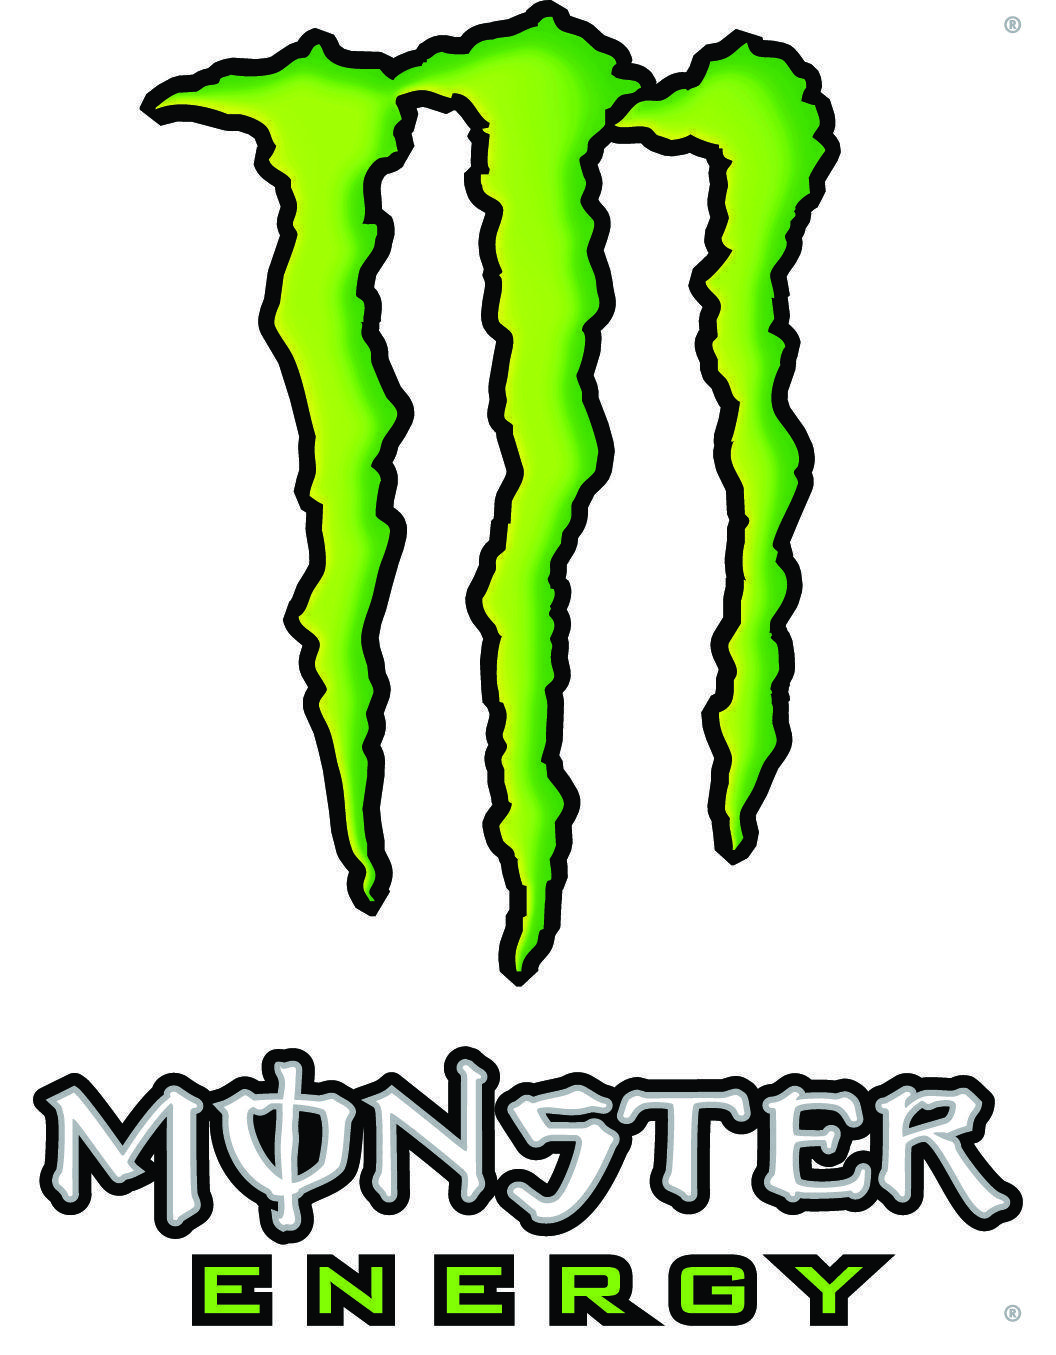 Red Monster Energy Logo - Marketing Blog: Monster Energy and The Marketing Mix